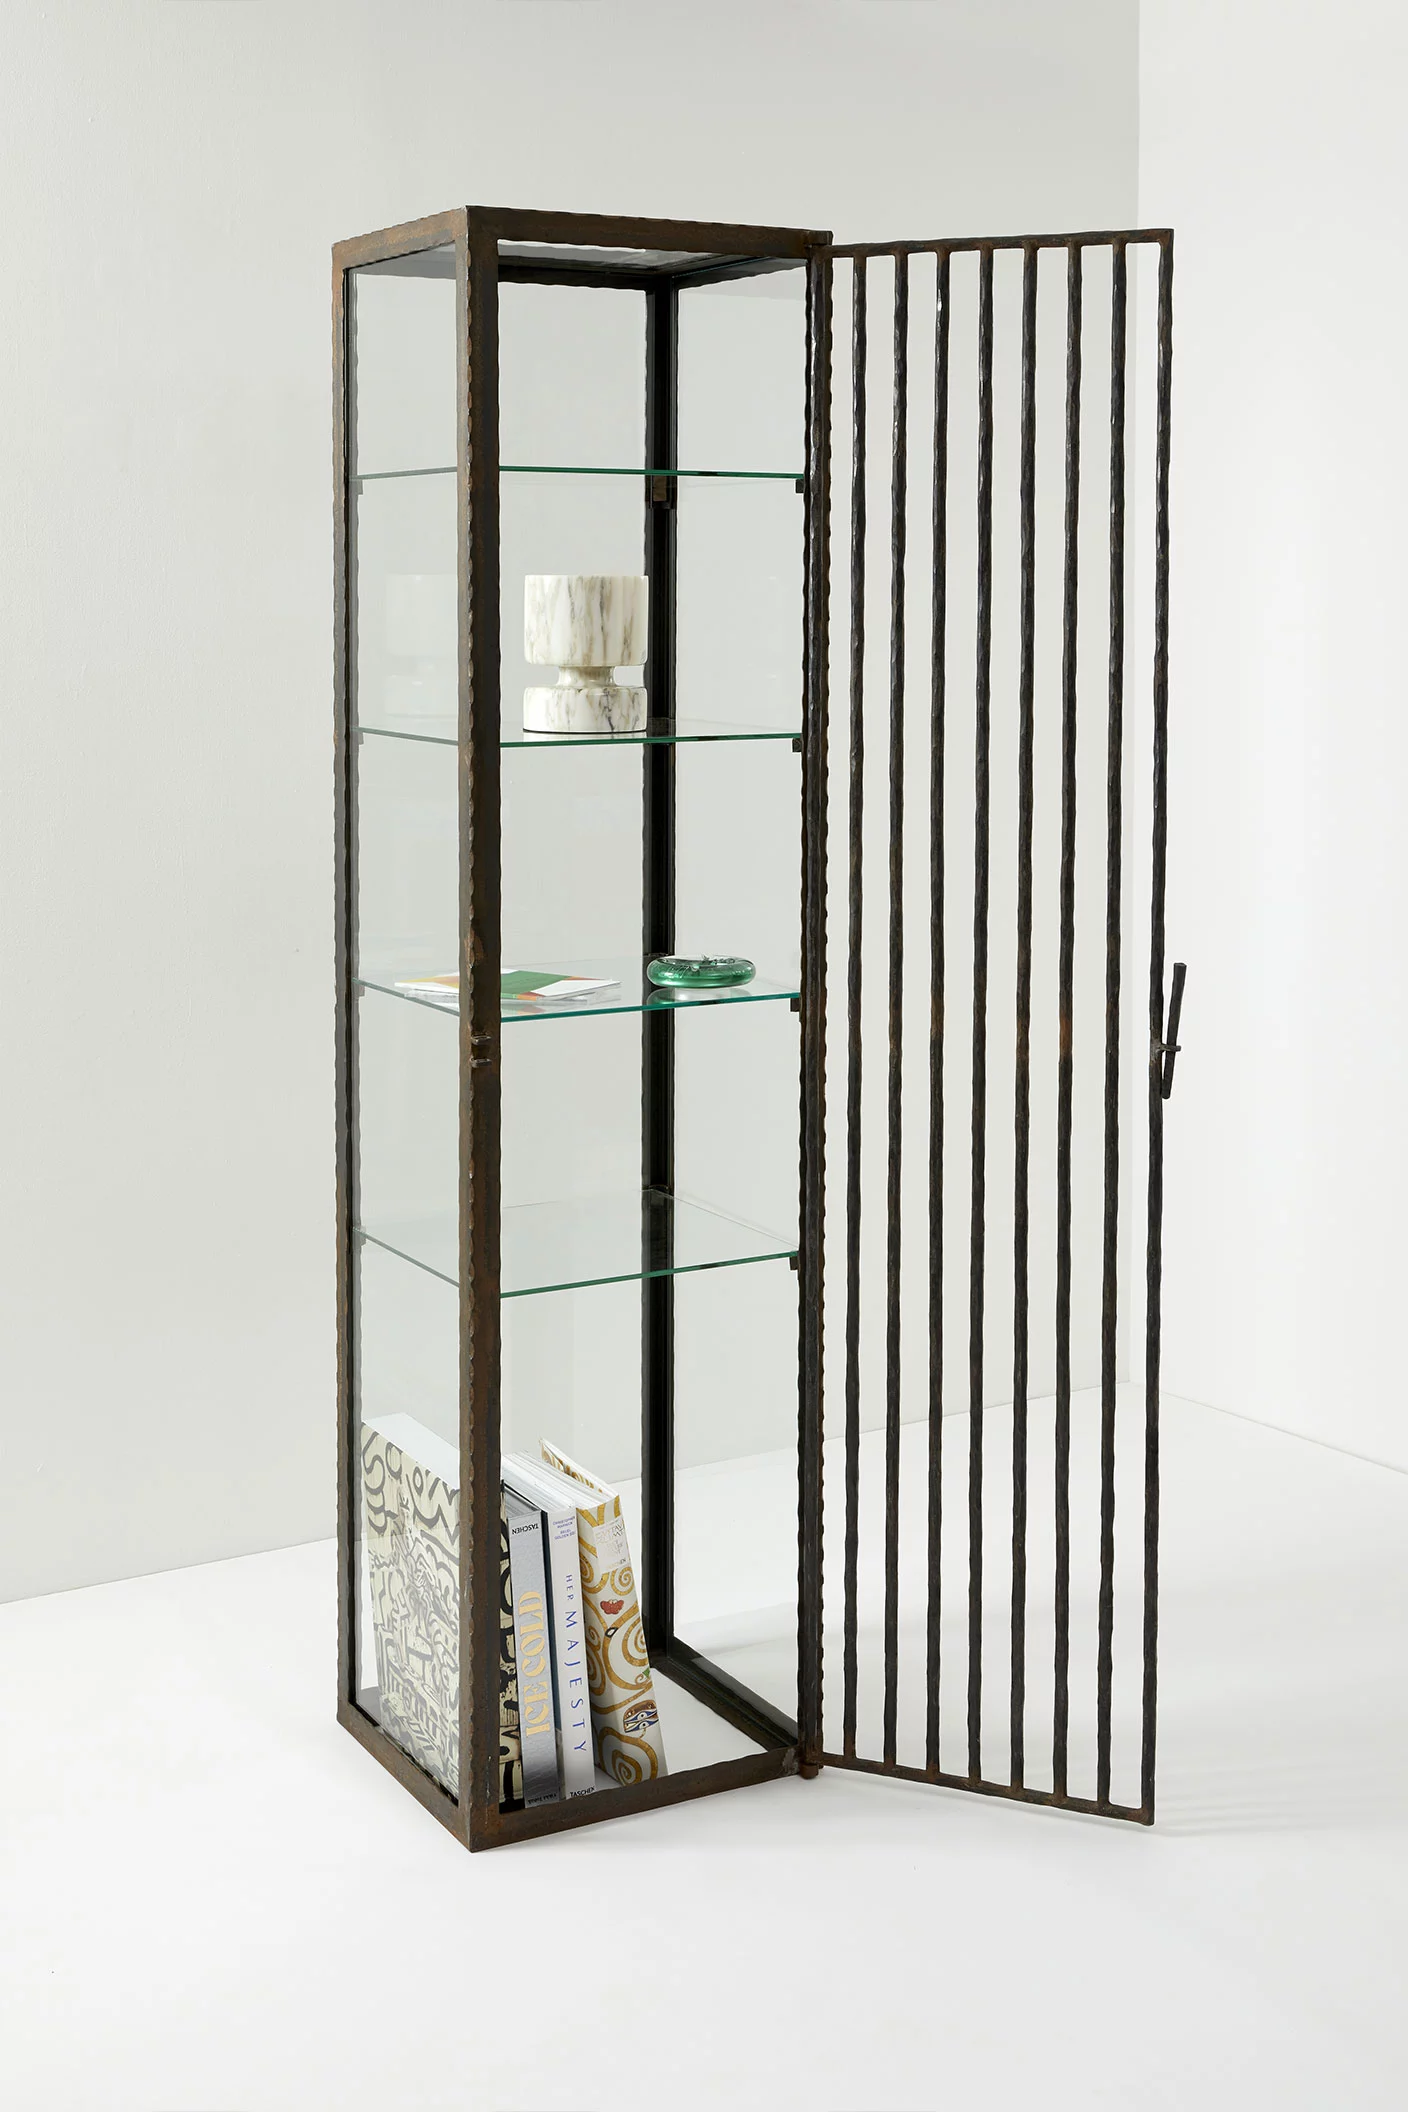 Cage haute - Elisabeth Garouste & Mattia Bonetti - Storage - Galerie kreo